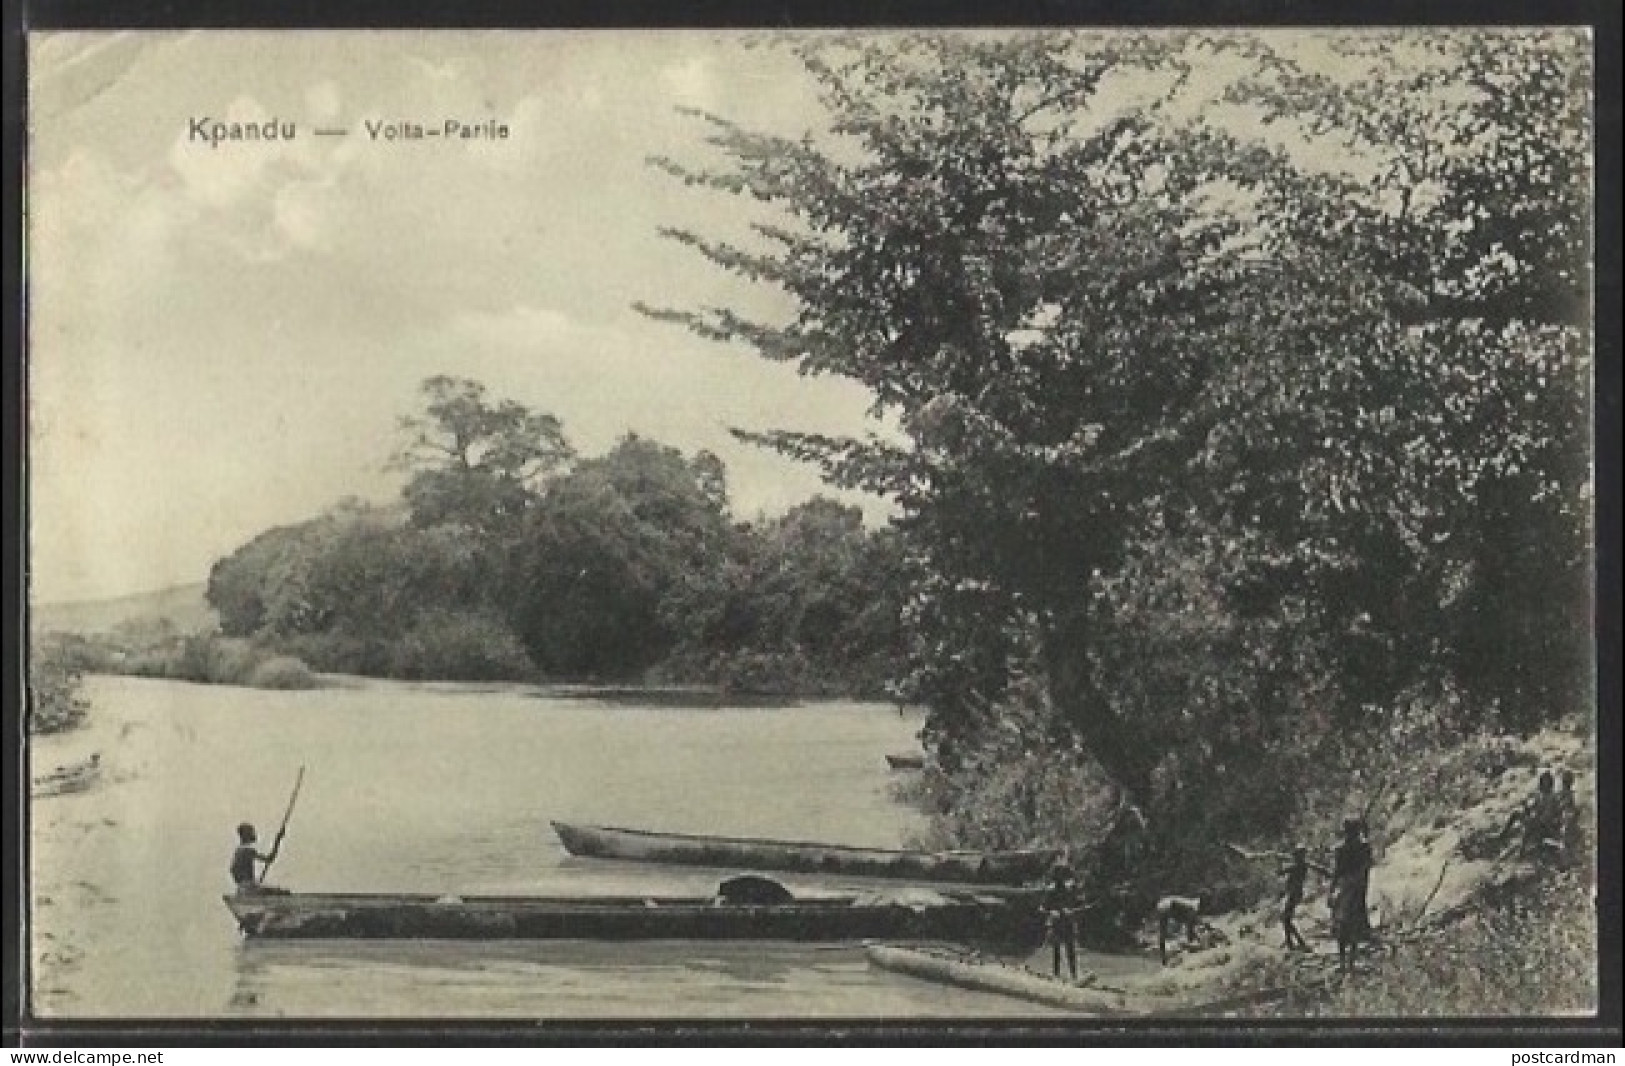 Togo - Kpandu - The Volta River. - Togo